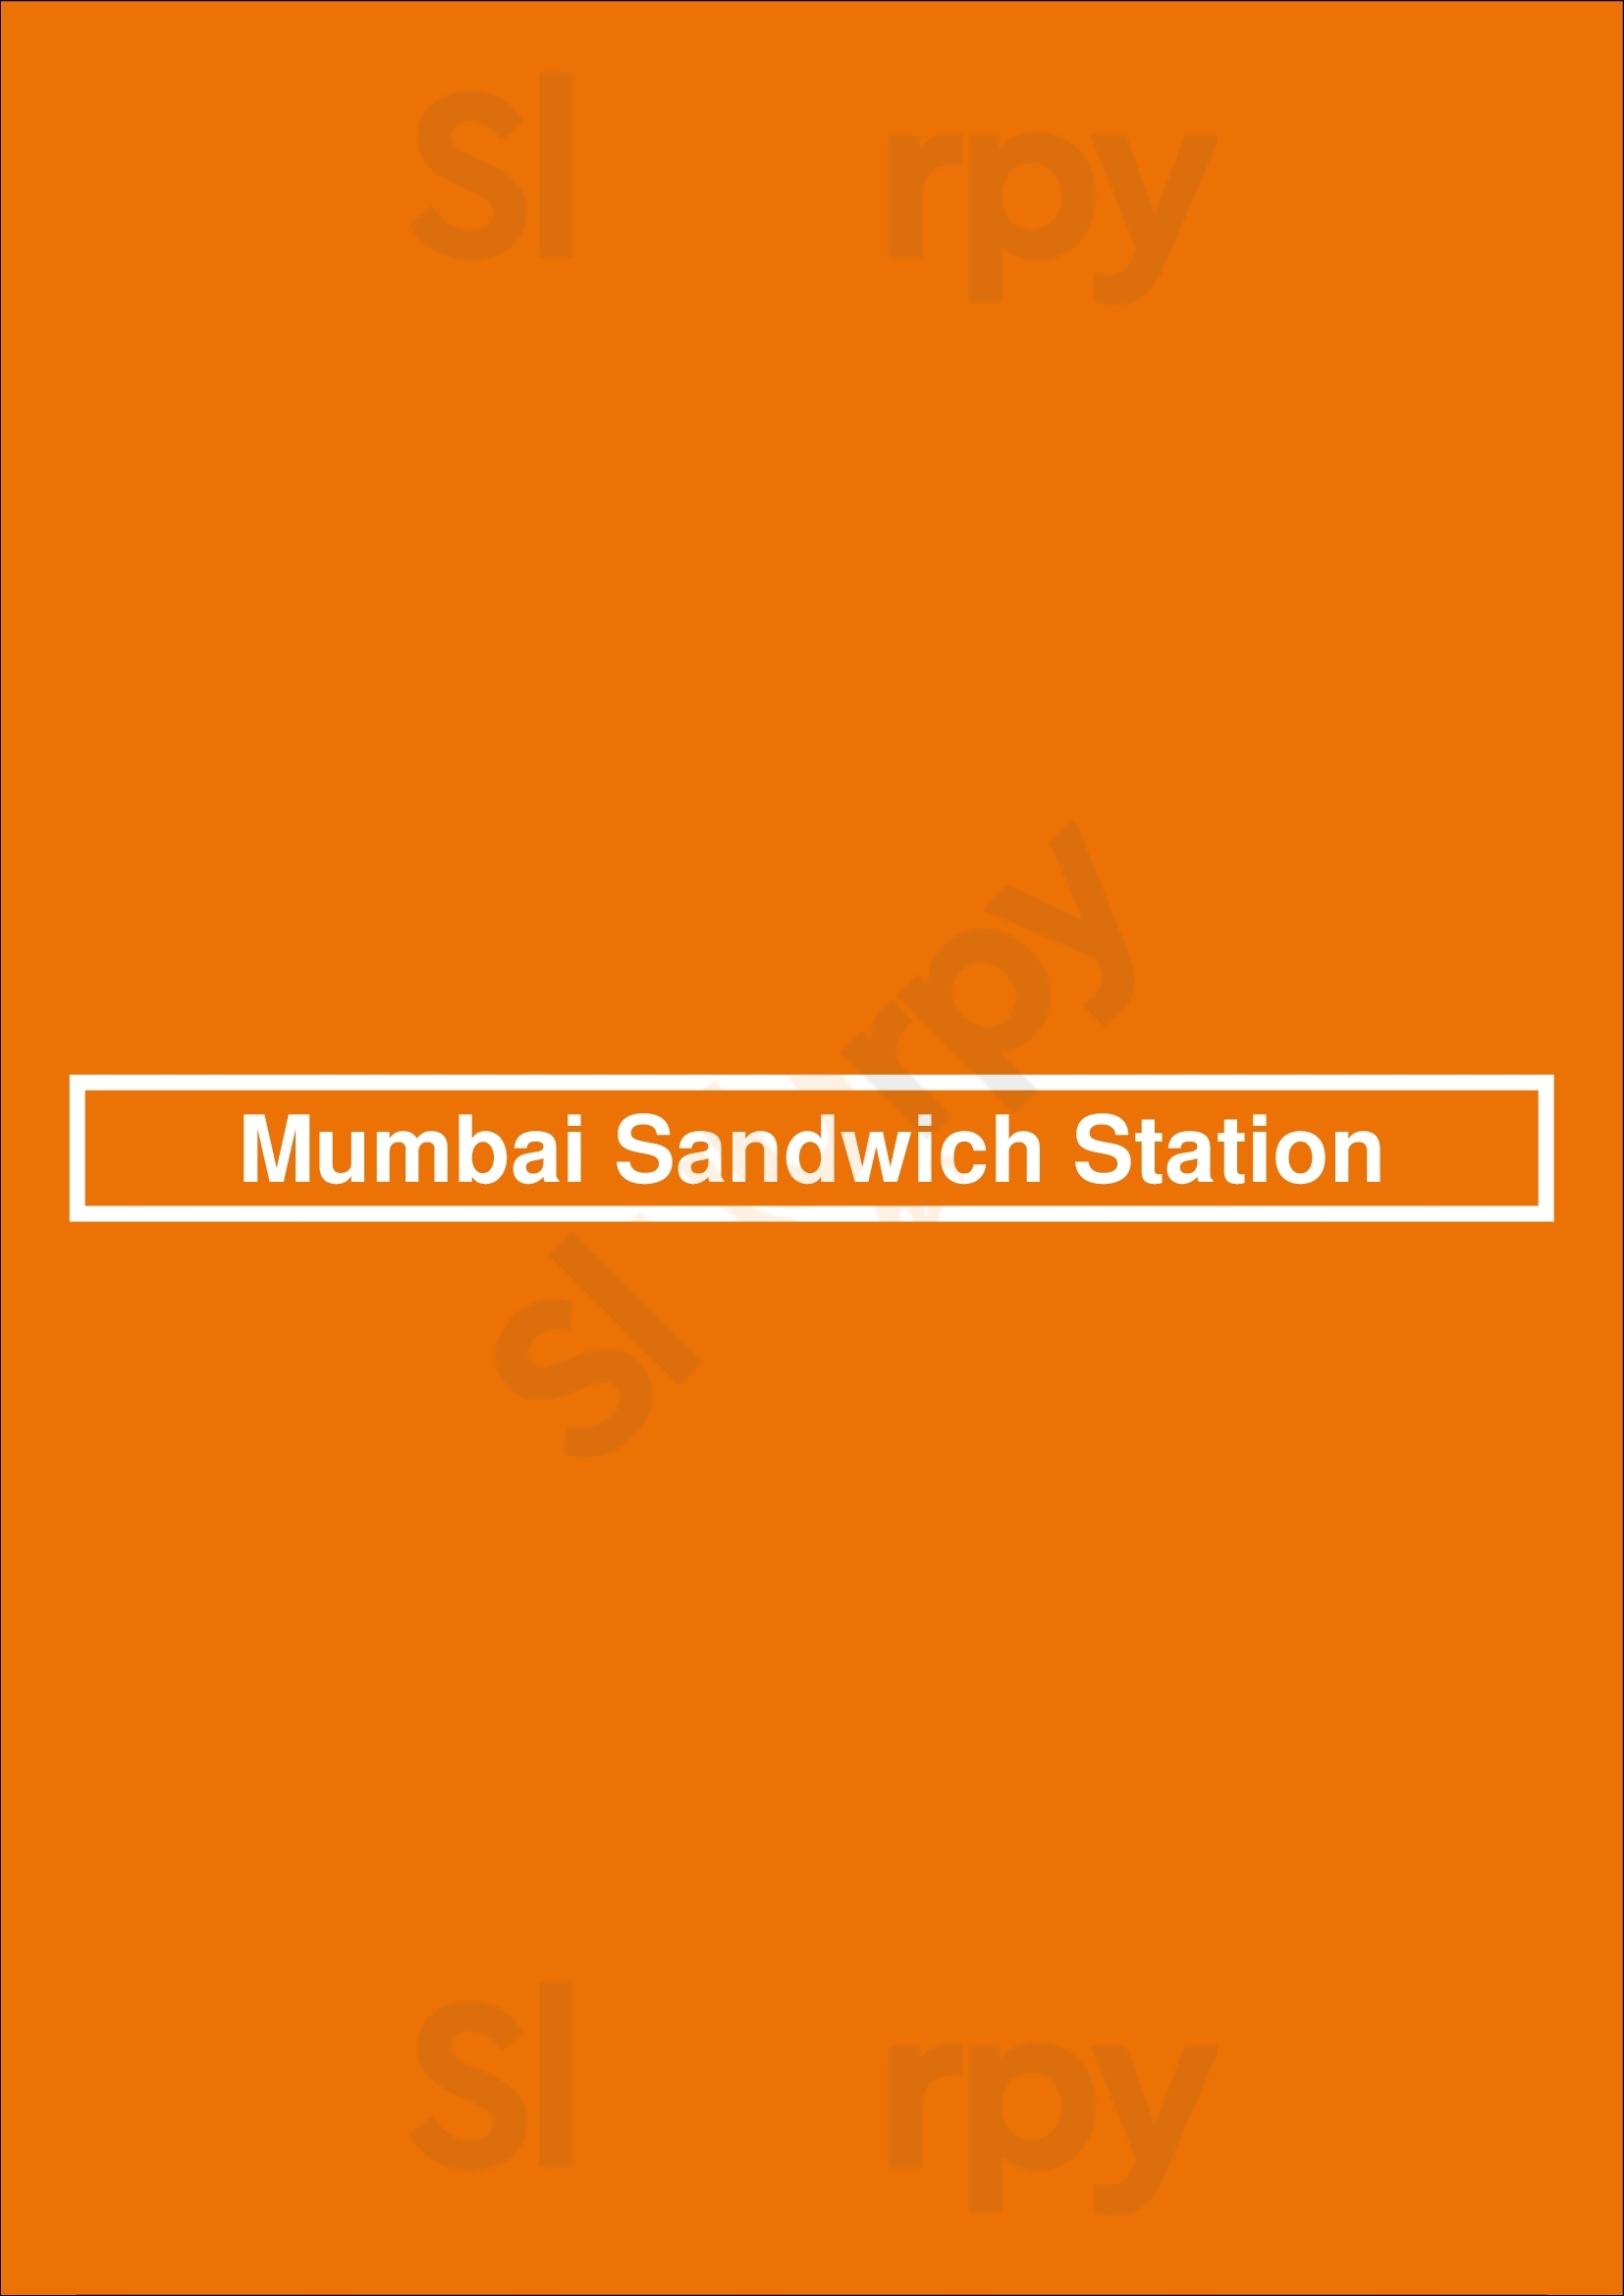 Mumbai Sandwich Station Leicester Menu - 1